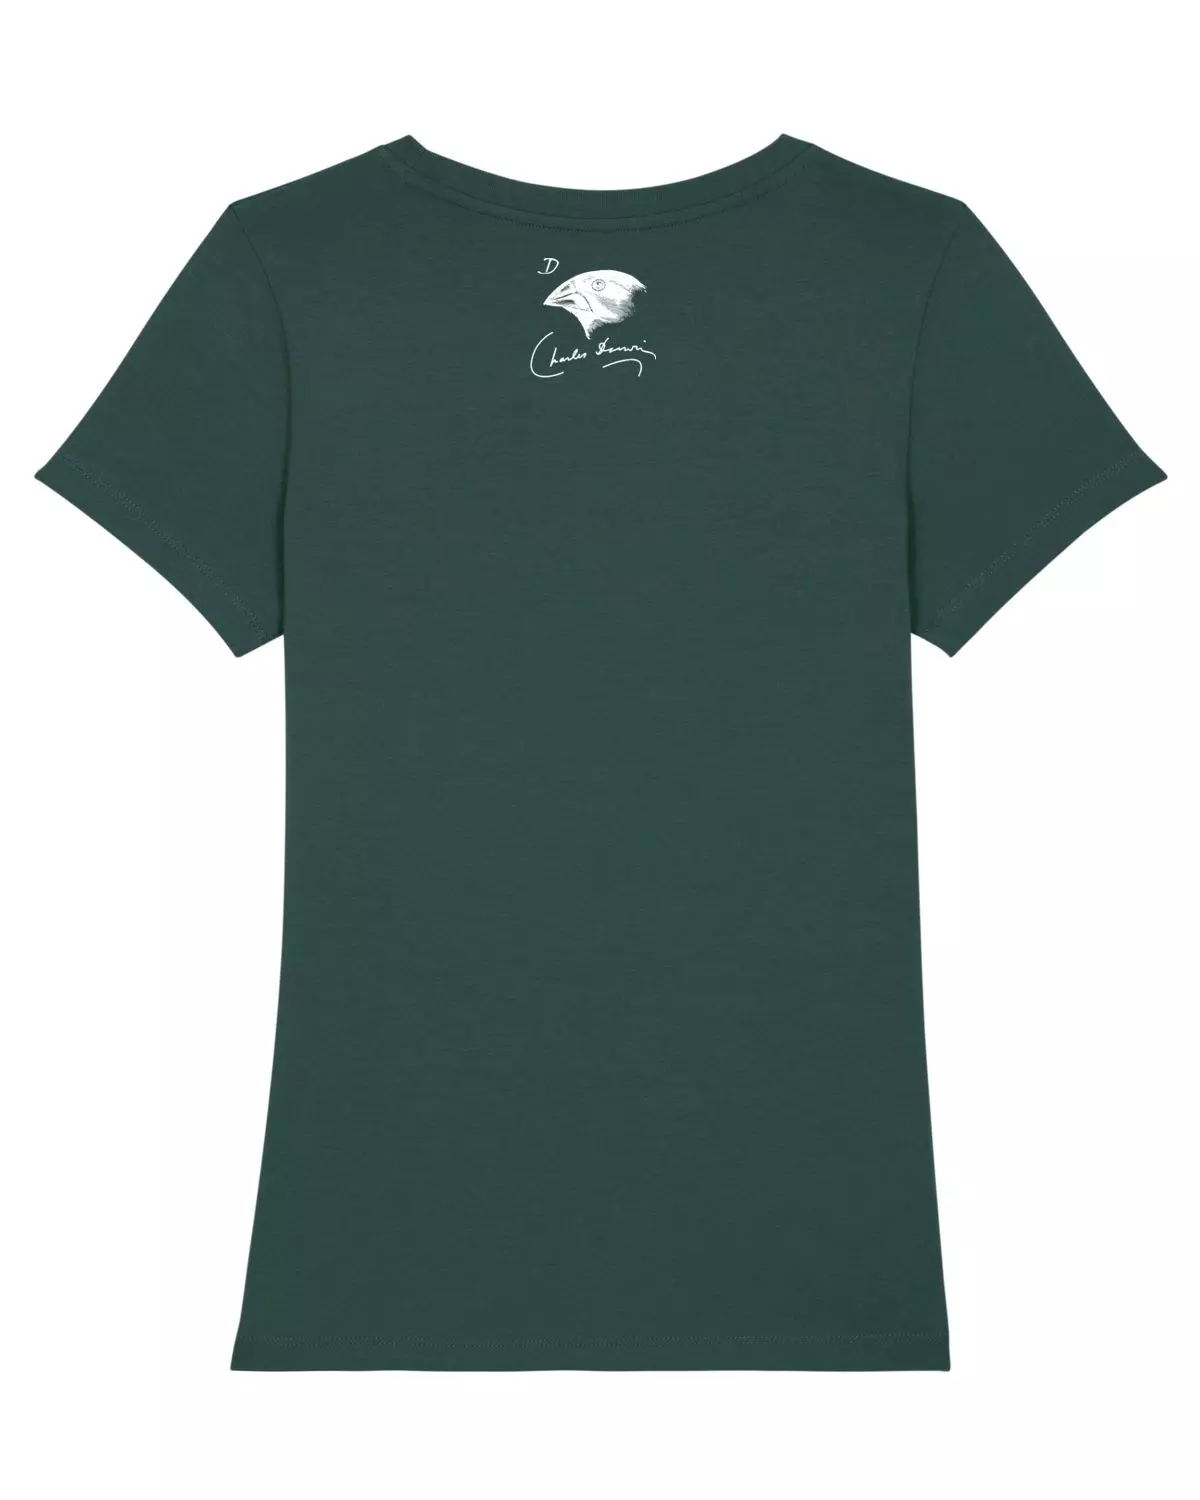 Science-T-Shirt Biologie Modell: Evolutionstheorie